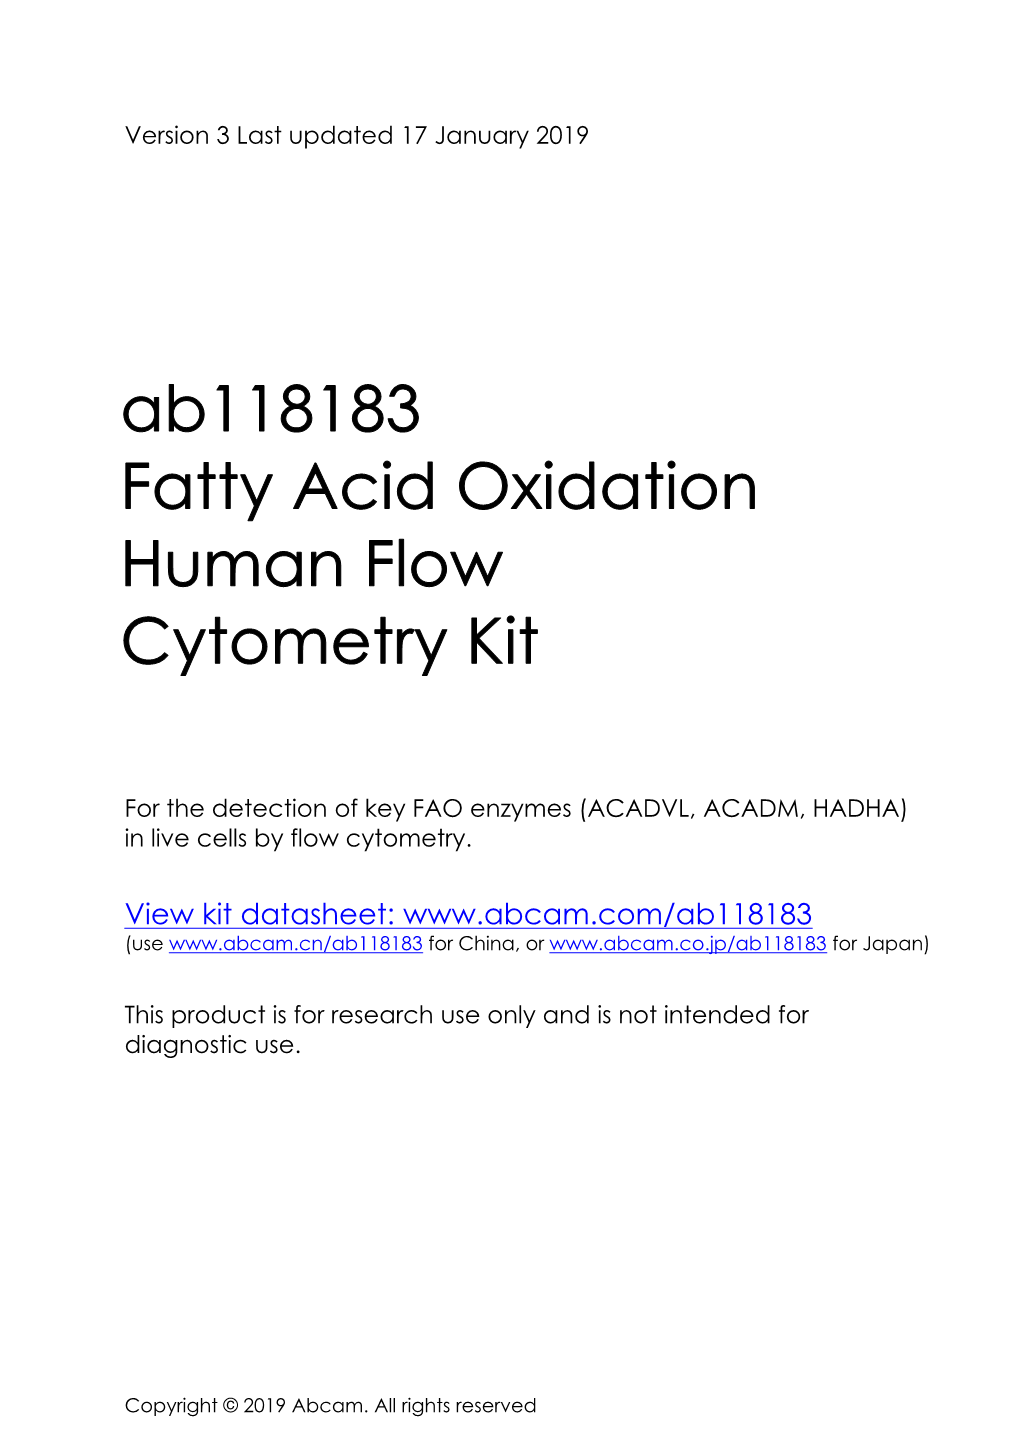 Ab118183 Fatty Acid Oxidation Human Flow Cytometry Kit